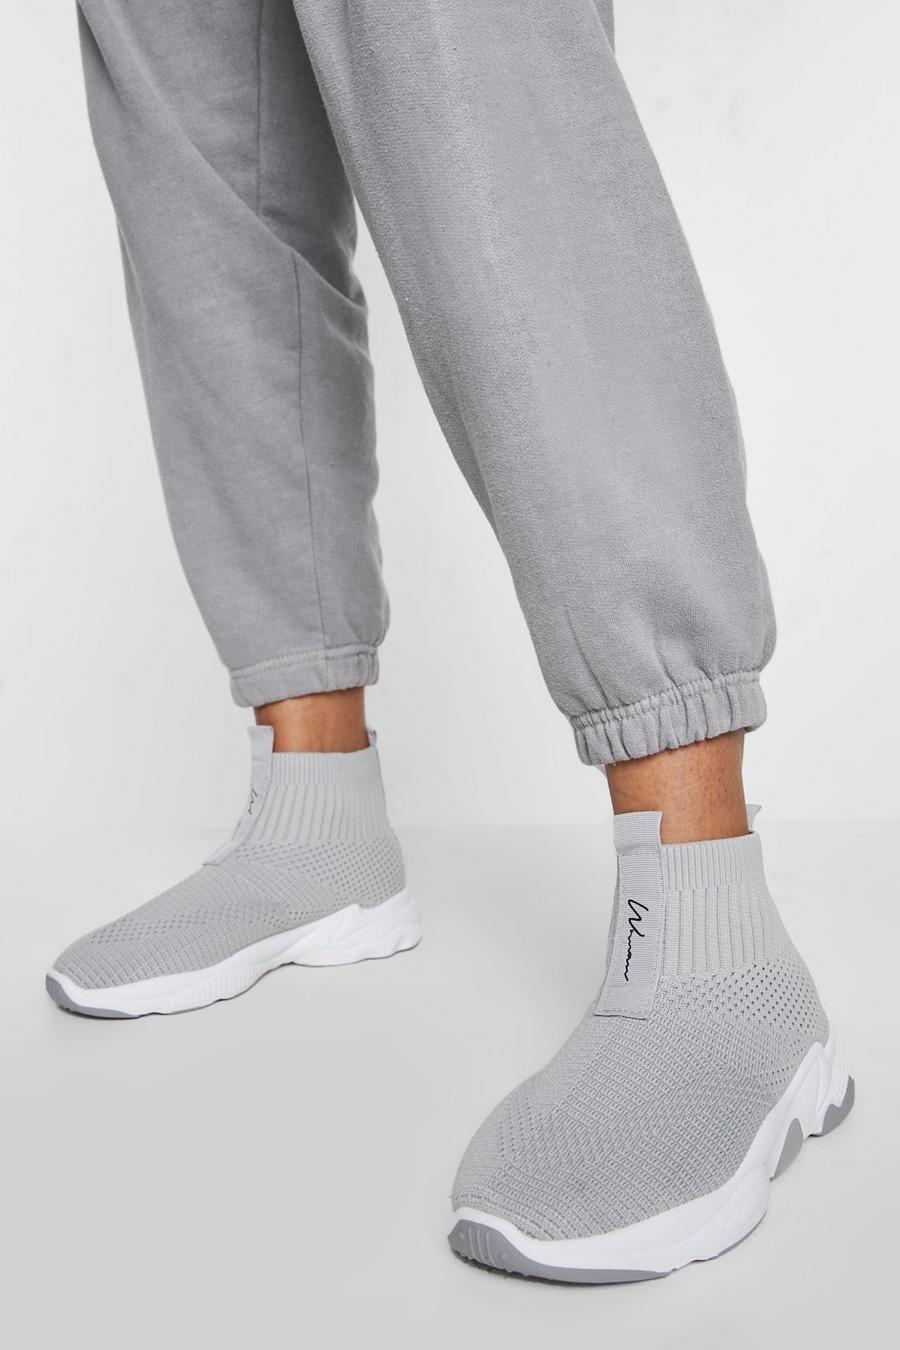 Botas calcetín de holgura ancha con suela gruesa, Grey gris